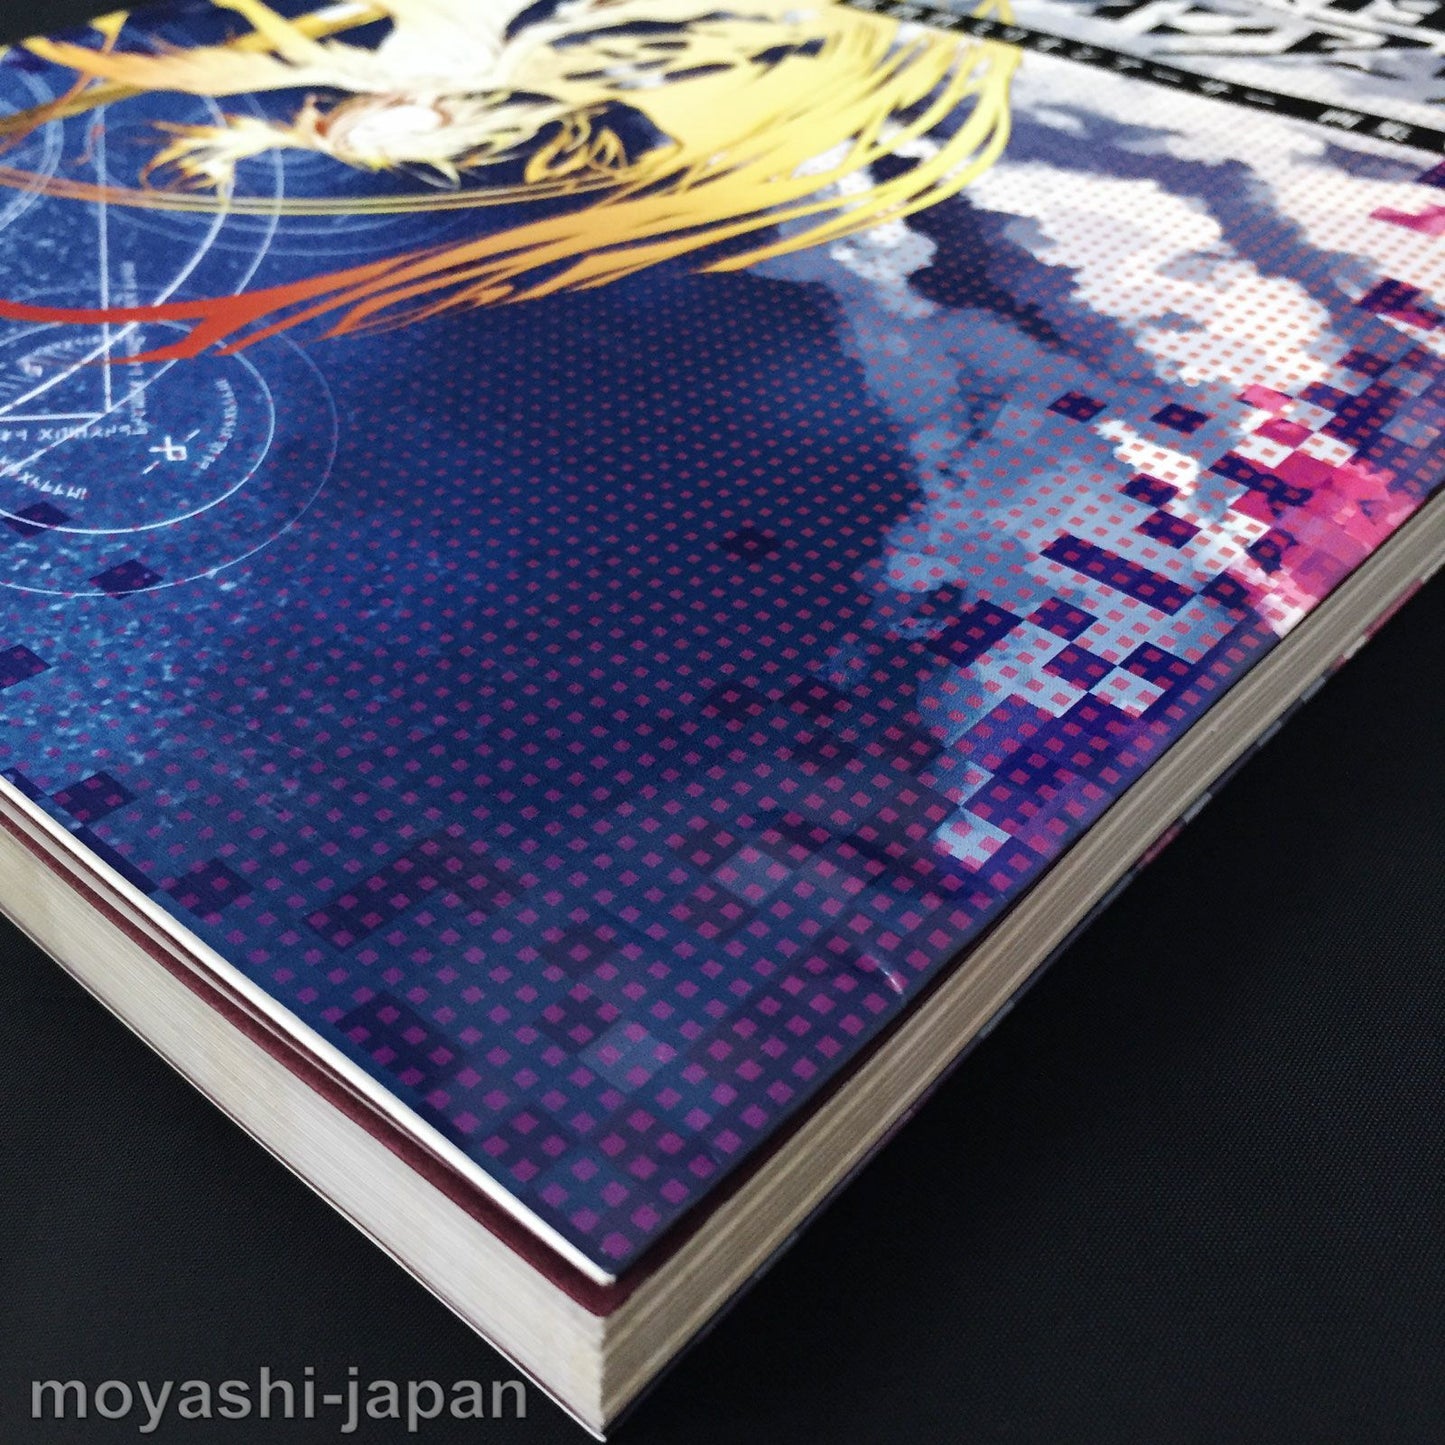 Kaku-San-Sei Million Arthur ART BOOK Vol.2